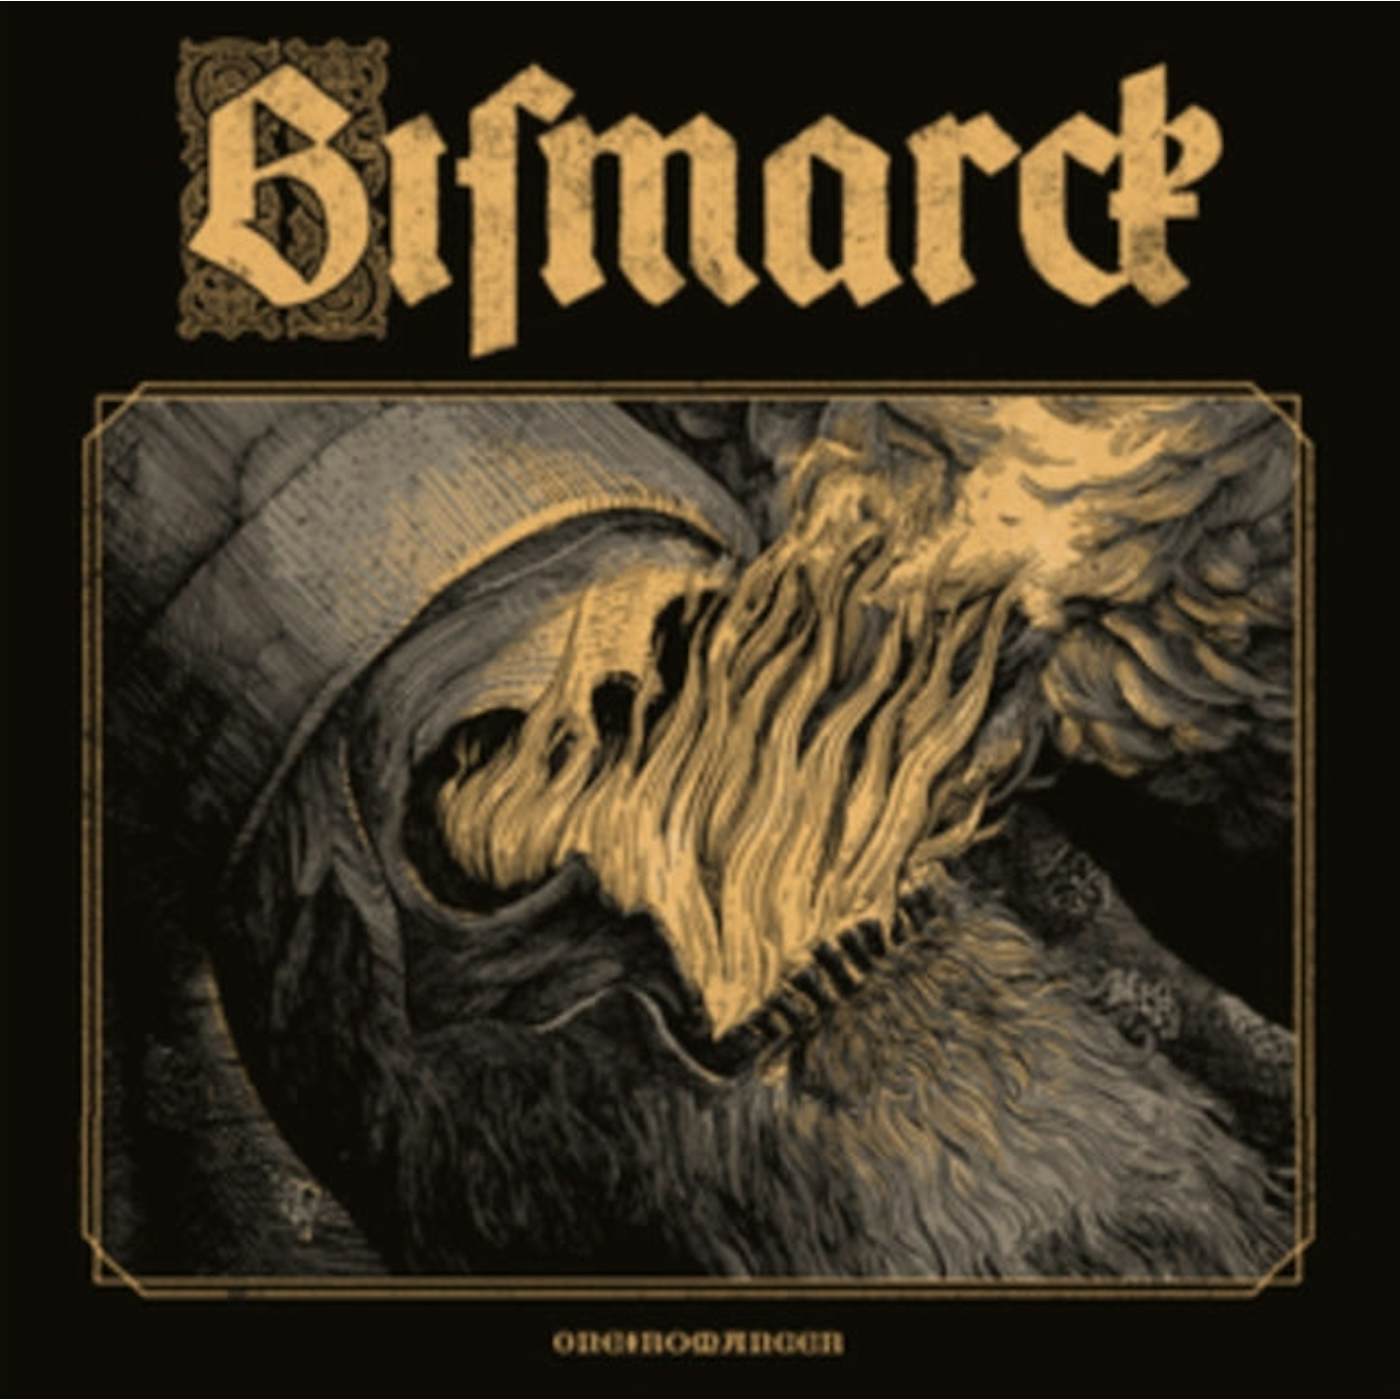 Bismarck LP - Oneiromancer (Vinyl)